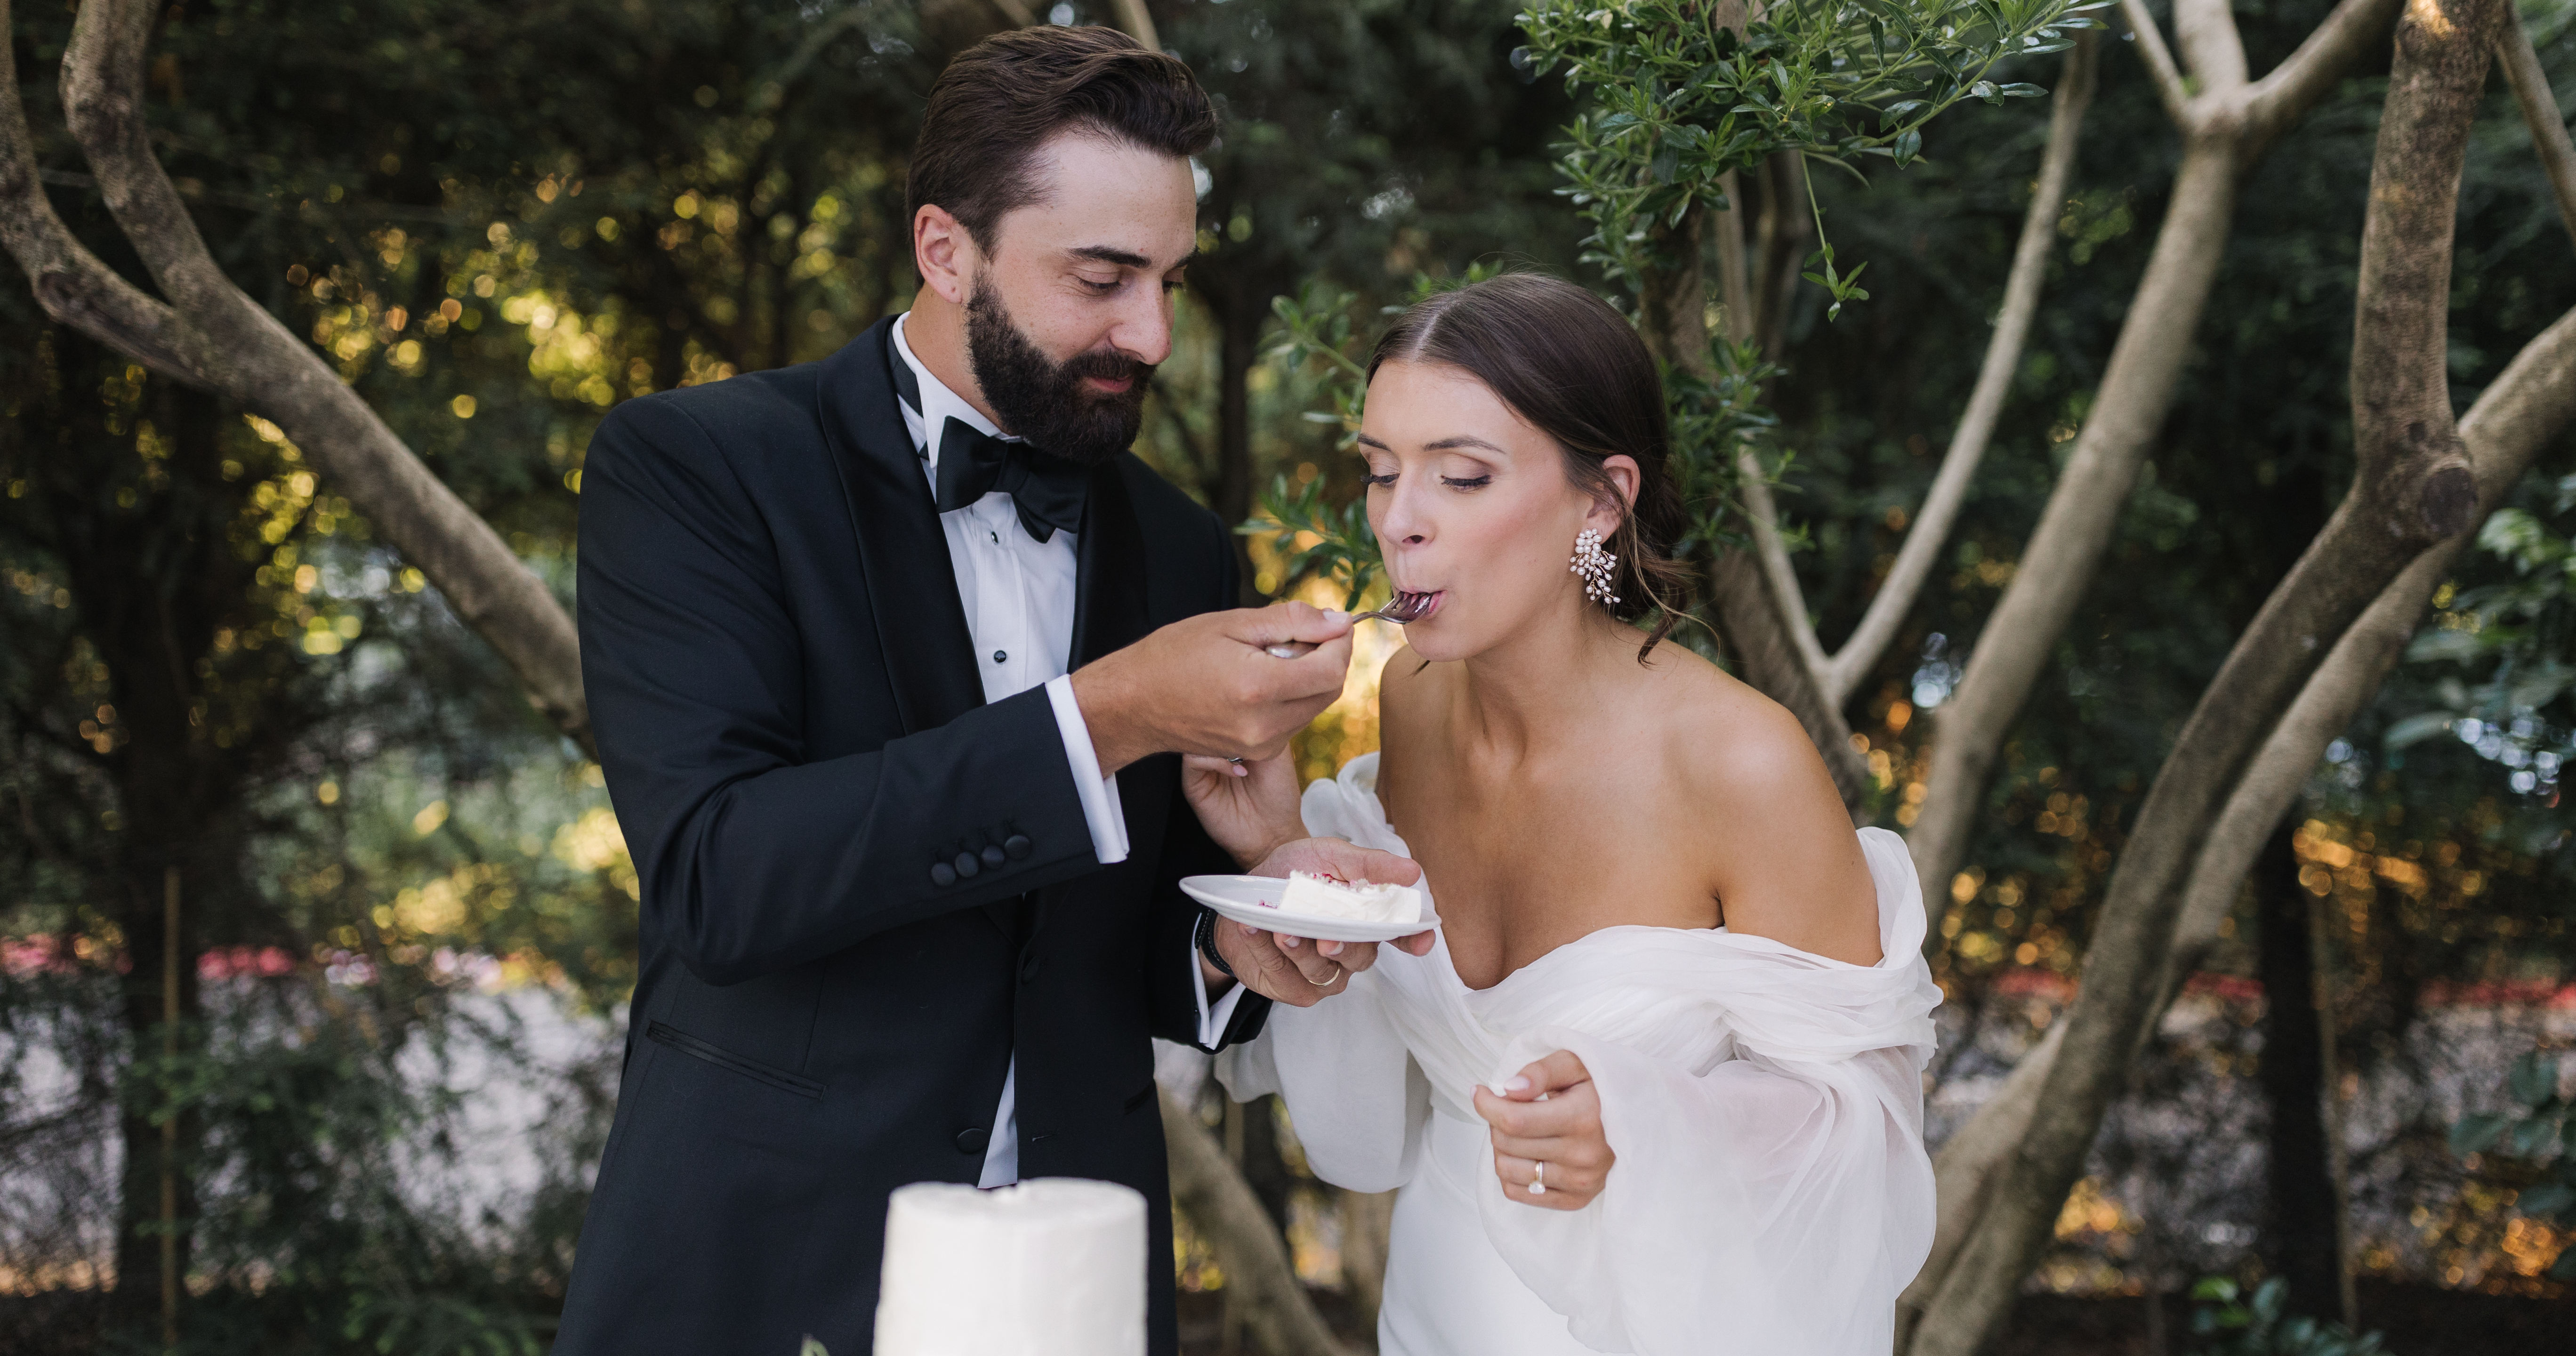 Serena & Jacob’s Botanical Gardens Wedding| Photos | Wedding Venues in McMenamins Edgefield